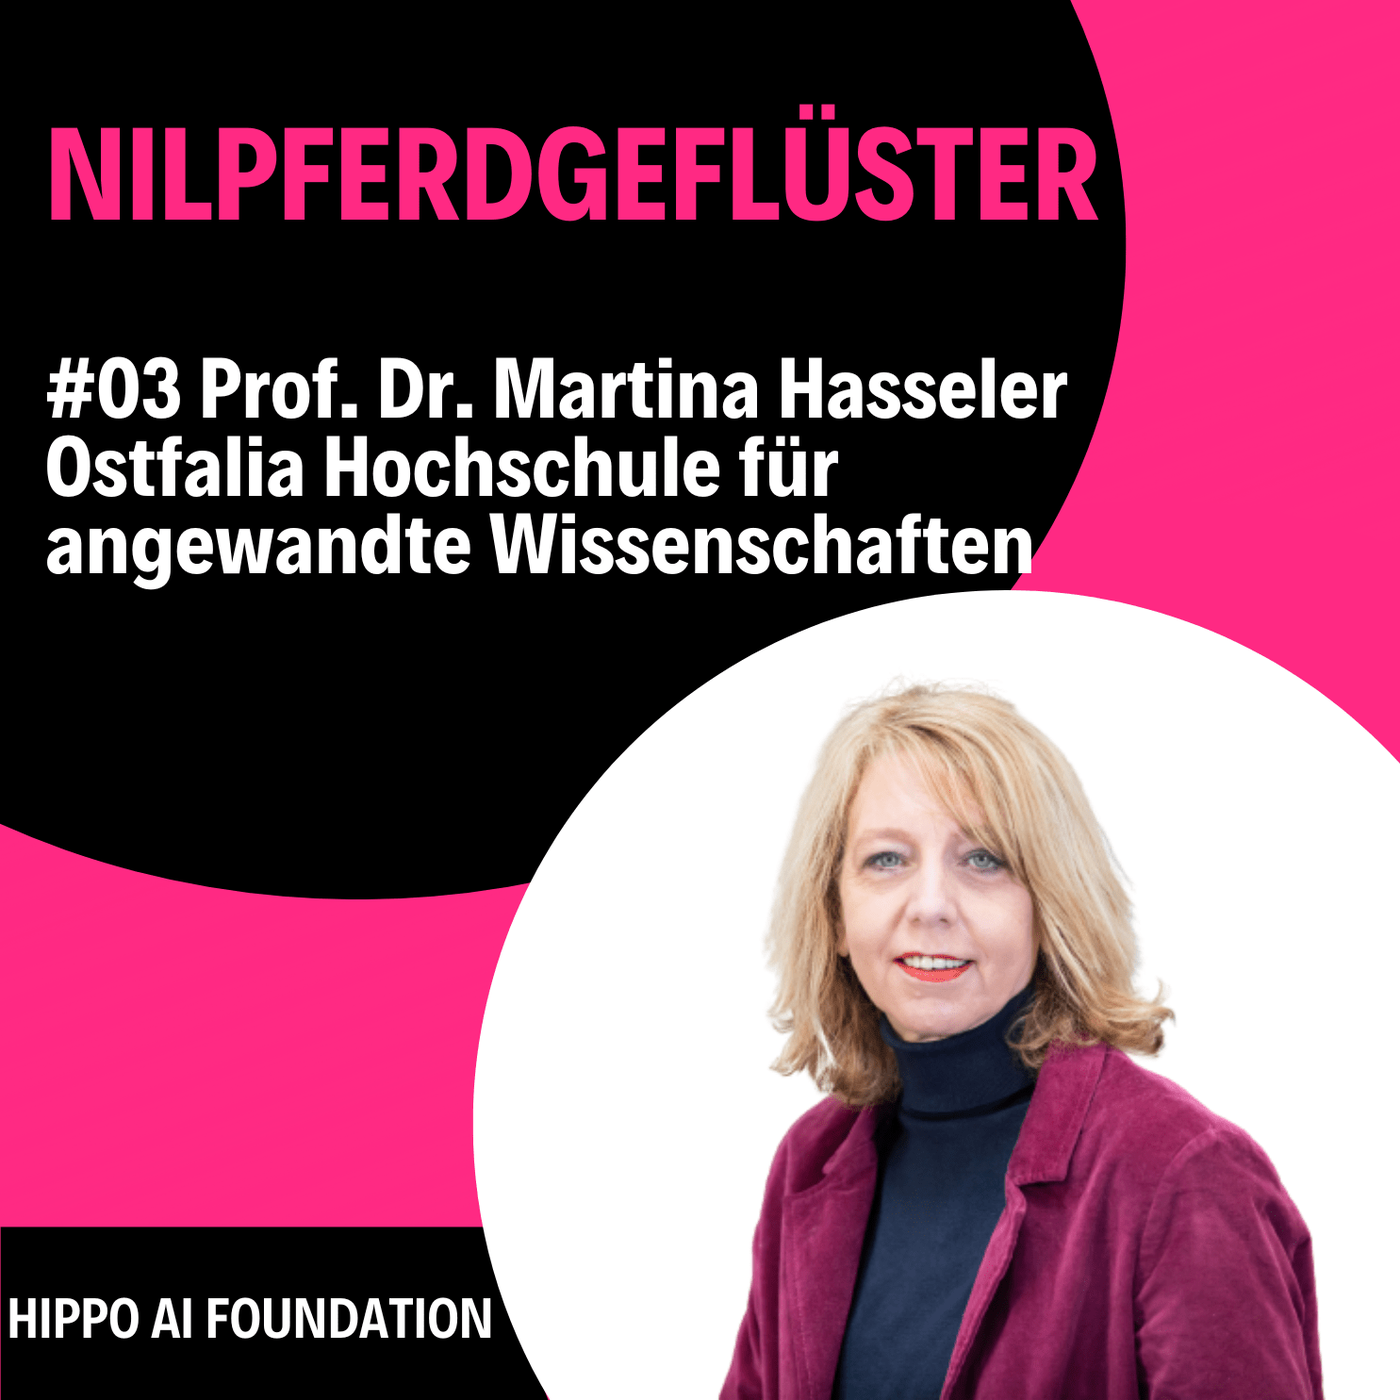 Prof. Dr. Martina Hasseler: Pflege kann mehr